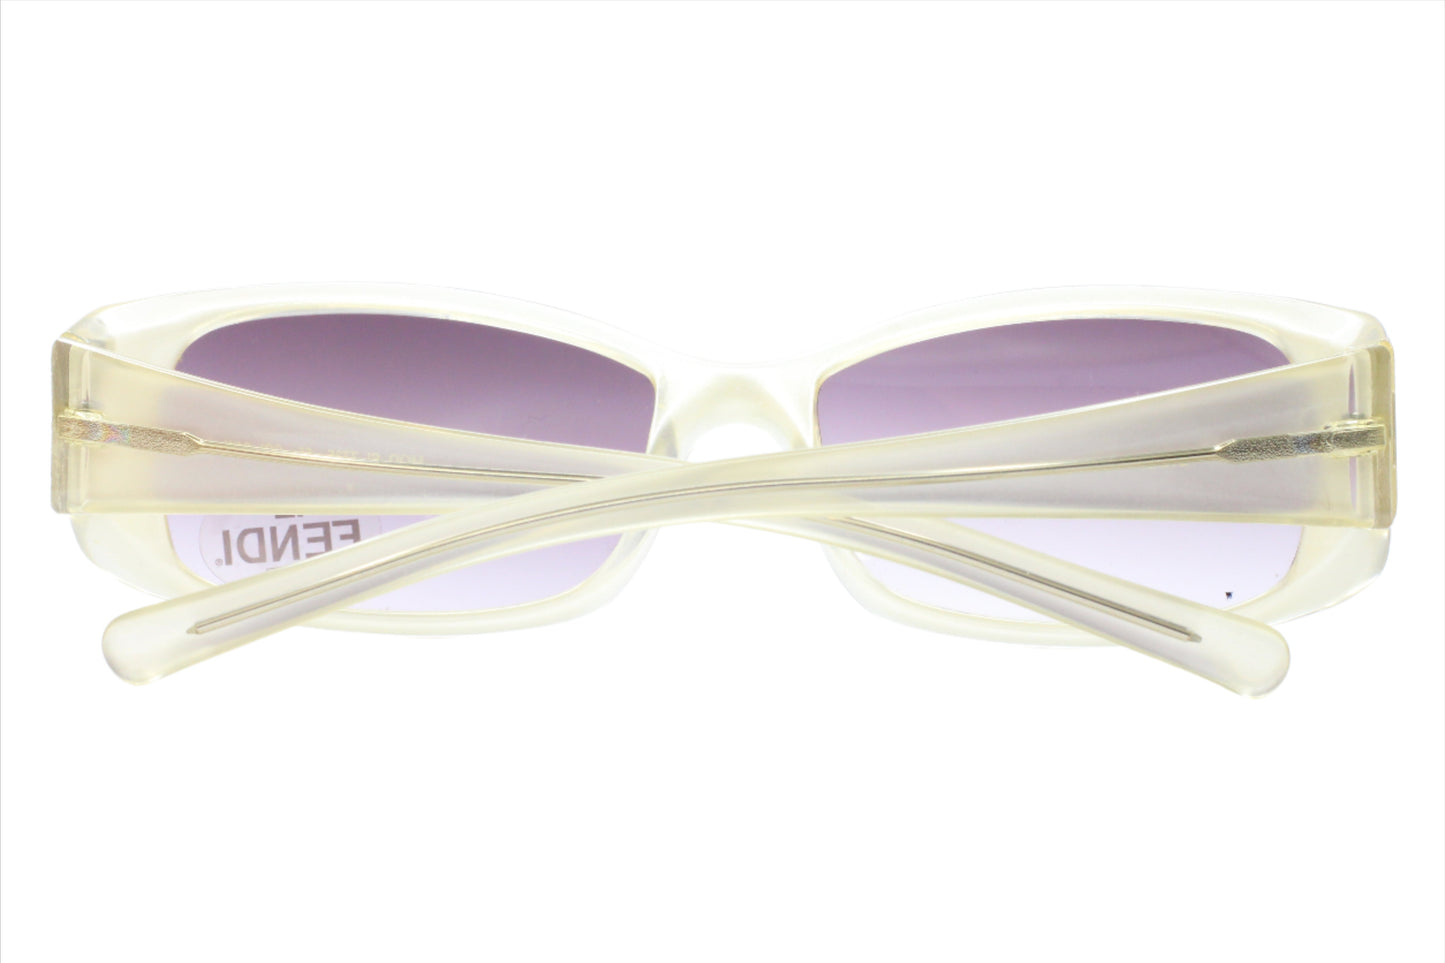 Fendi SL 7735 Clear White 90s Vintage Designer Italy Sunglasses